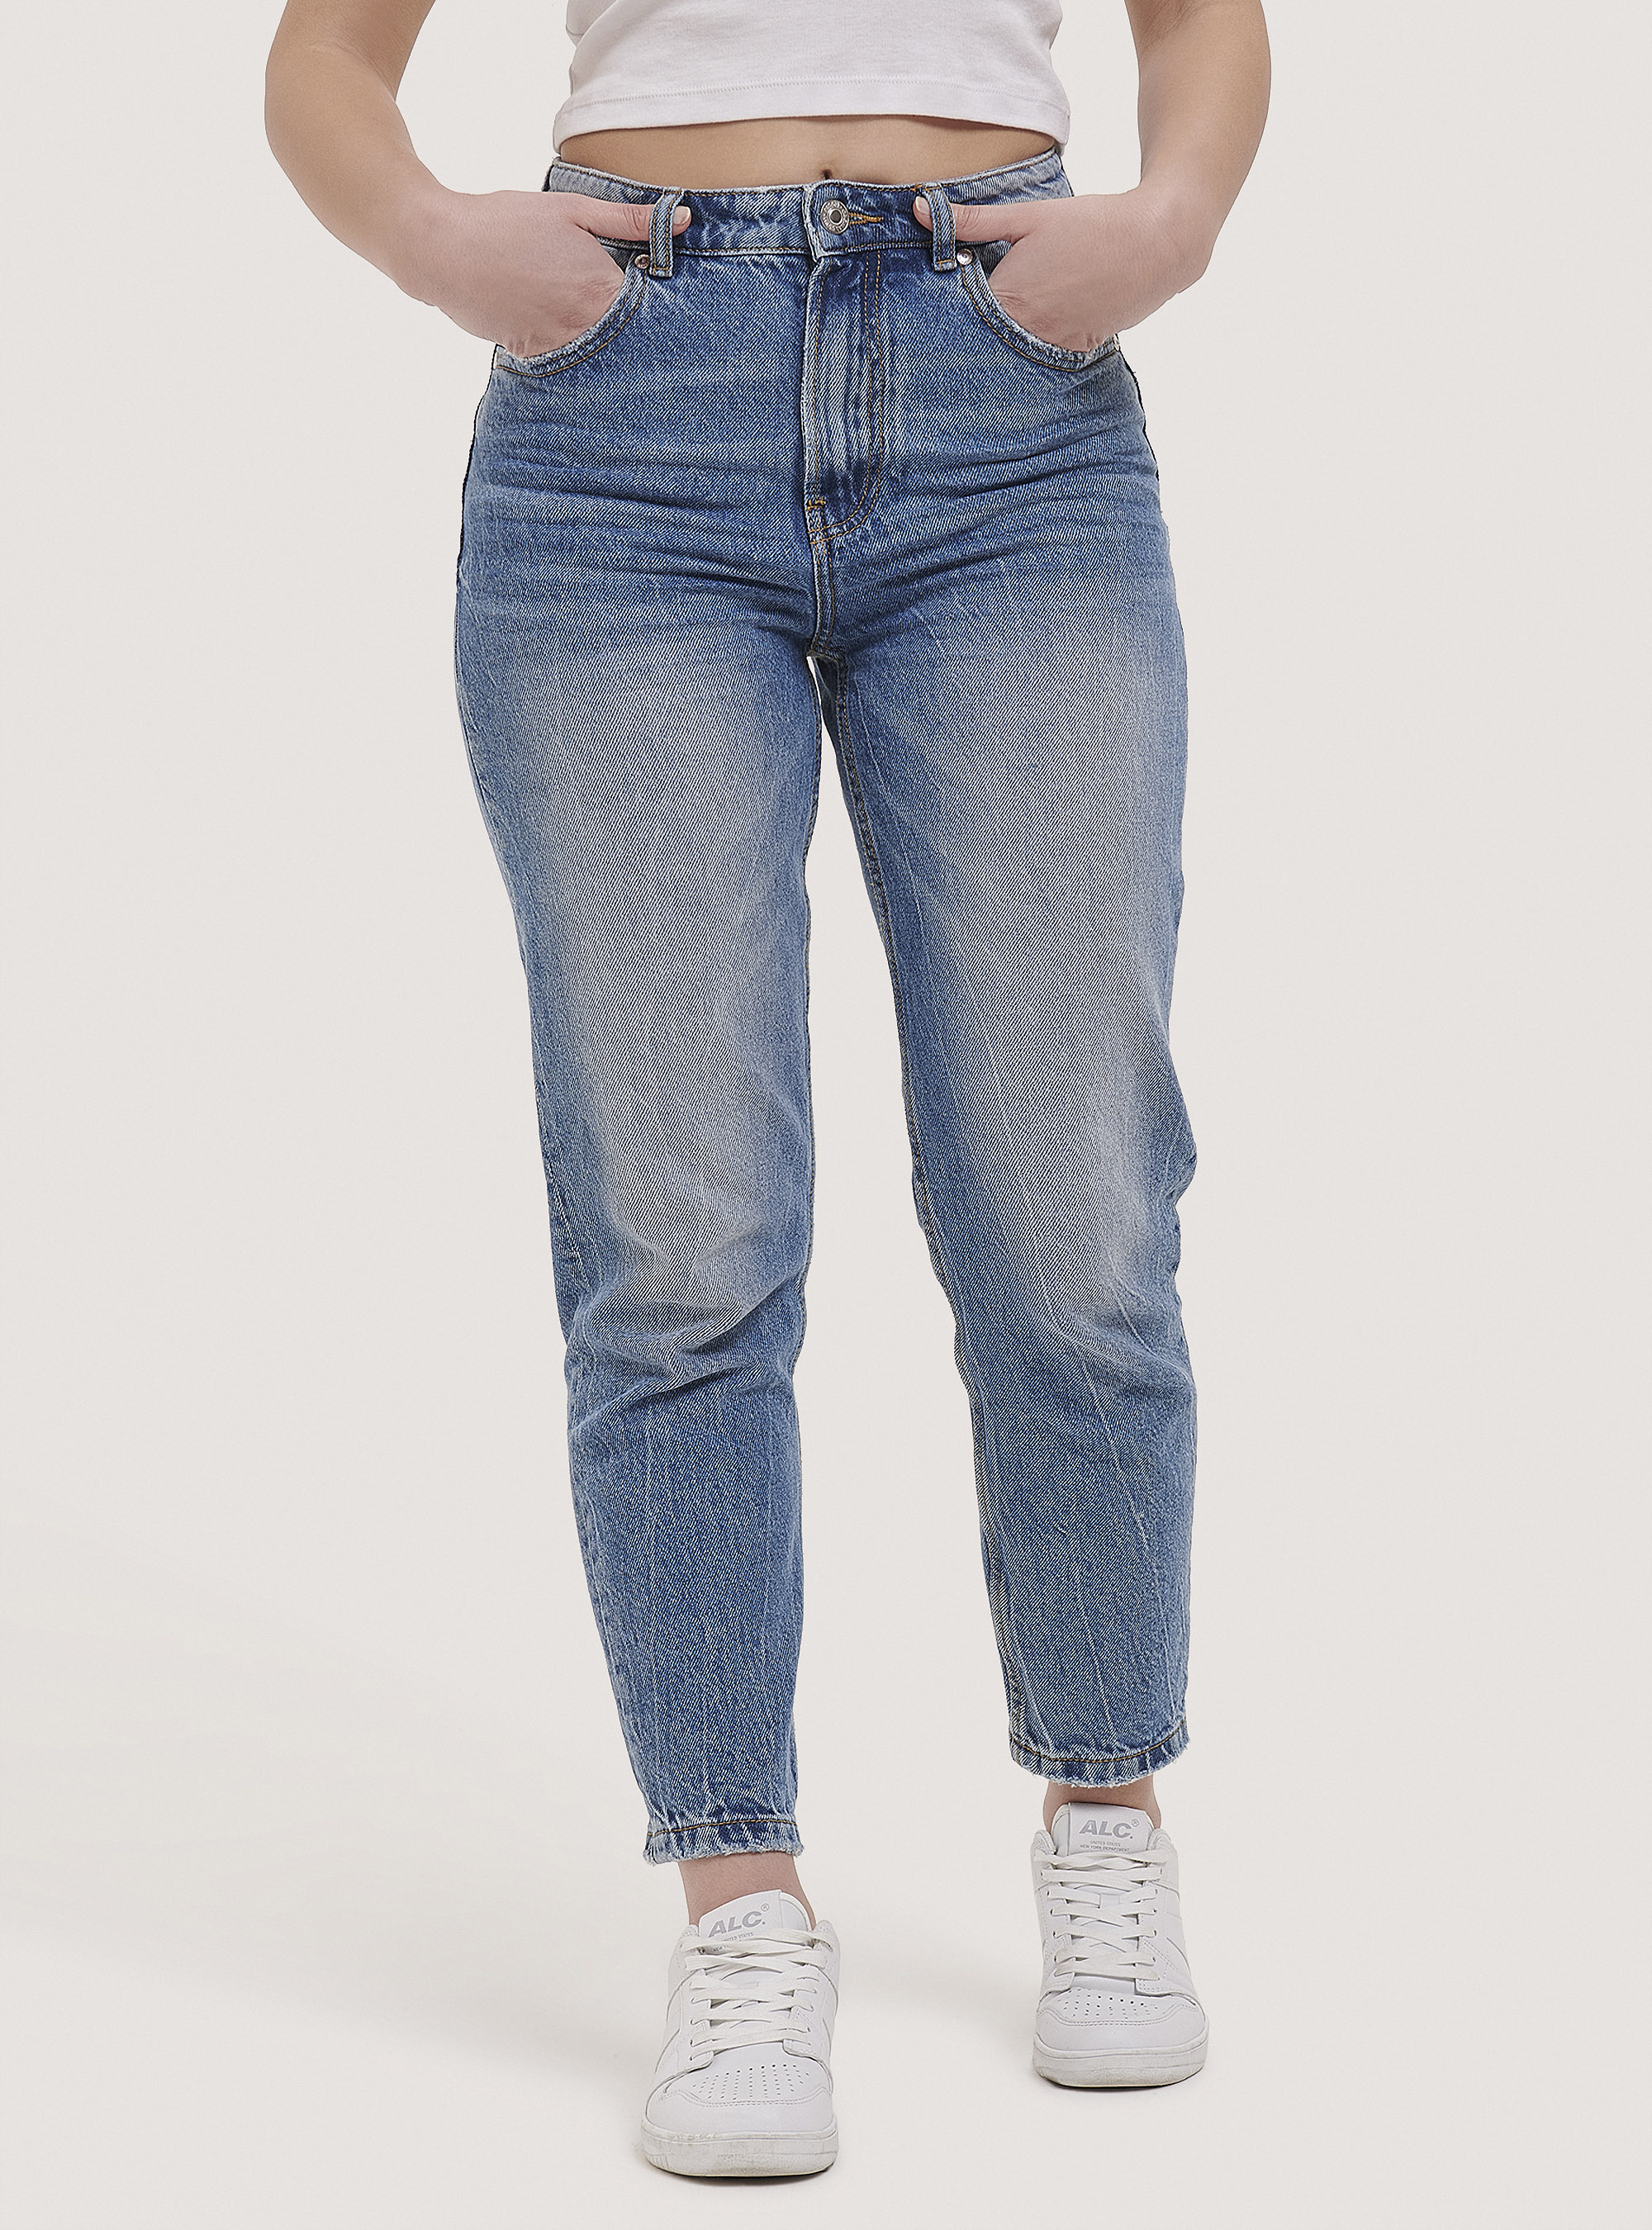 Jeans Donna Alcott Grigio Scuro Dames Kleding Spijkerbroeken Ripped jeans Alcott Ripped jeans 